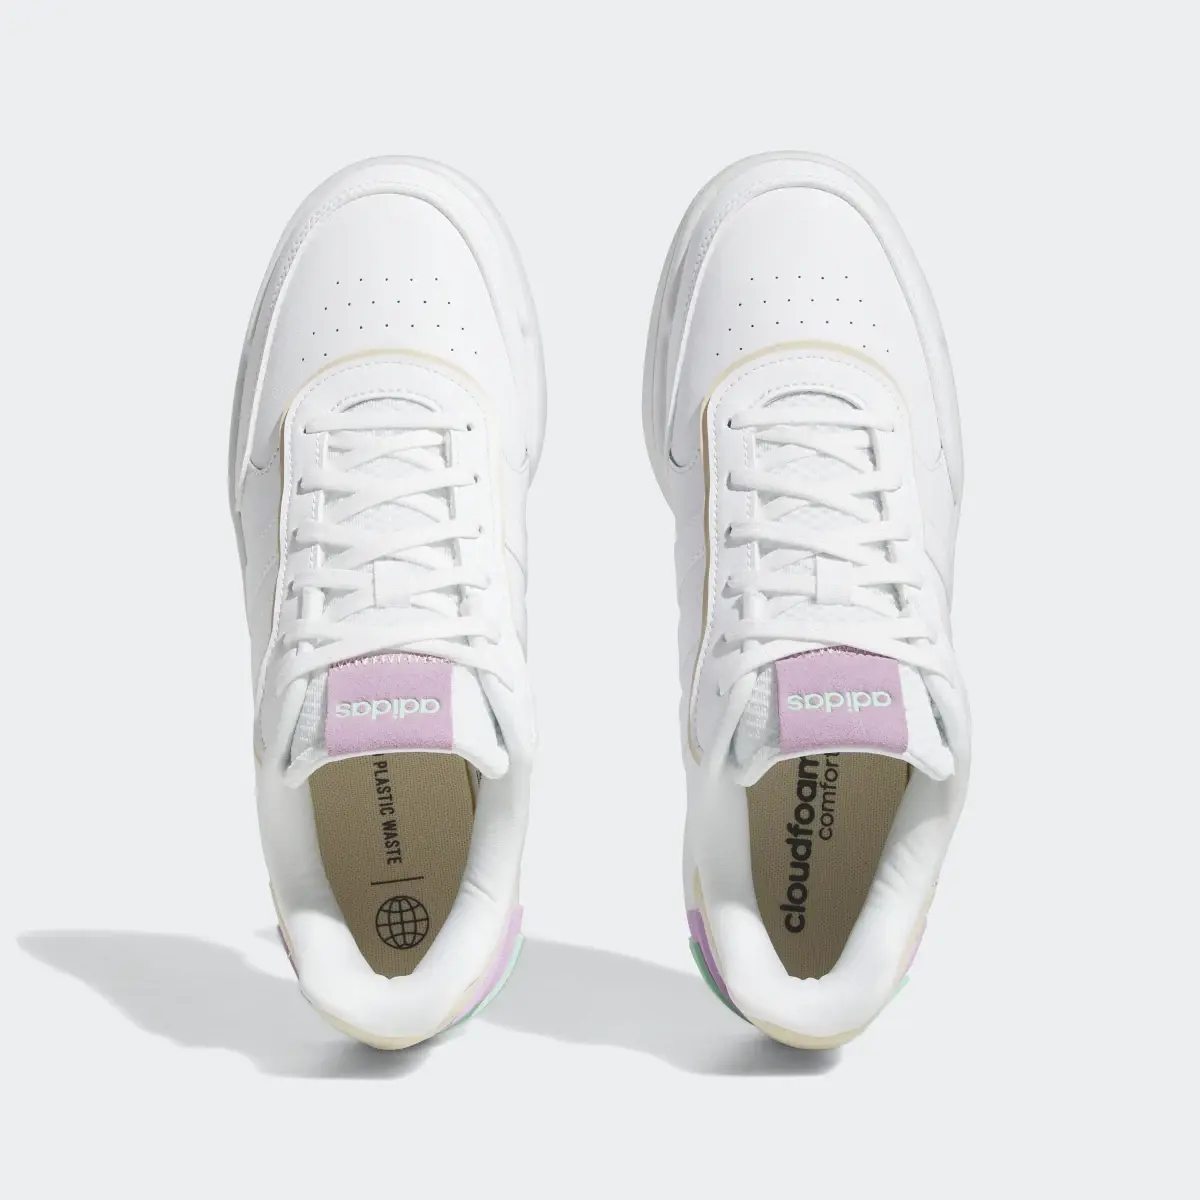 Adidas Postmove SE Shoes. 3